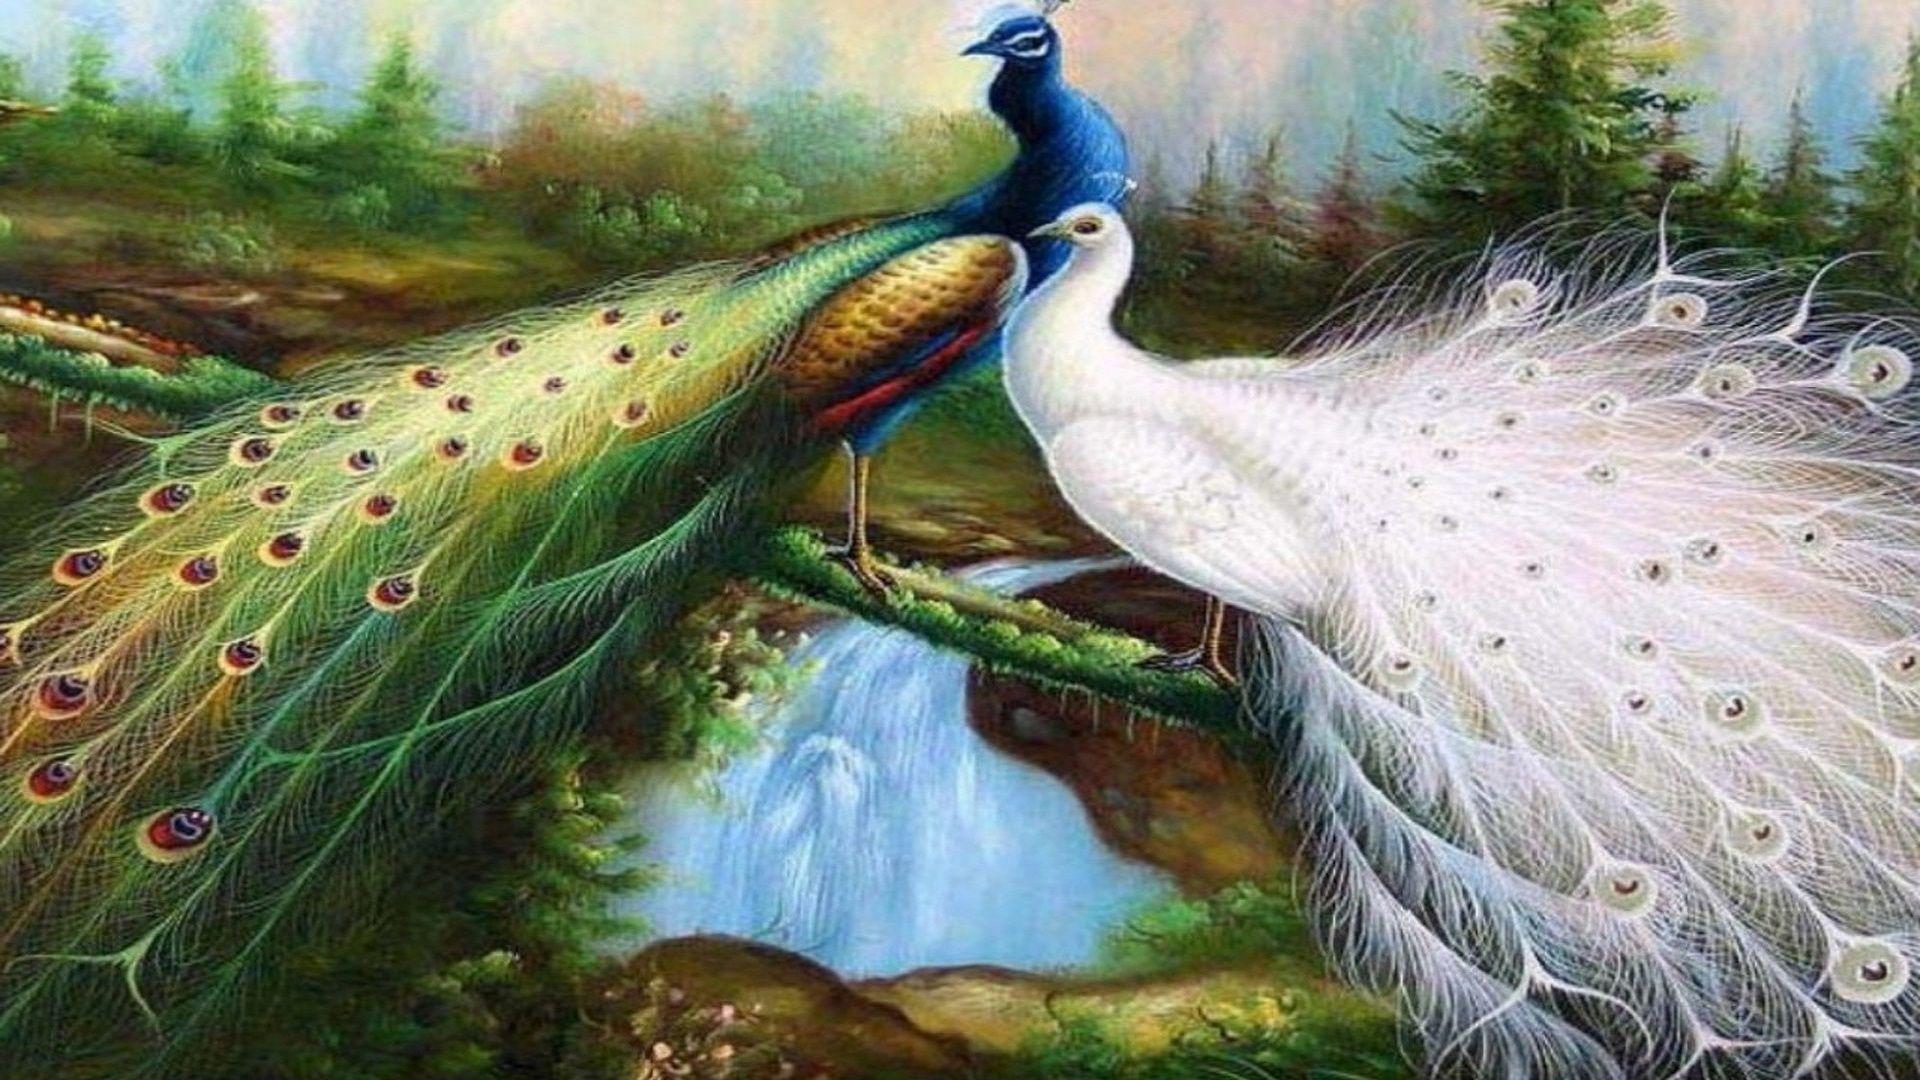 Beautiful Peacock Wallpapers - Top Free ...